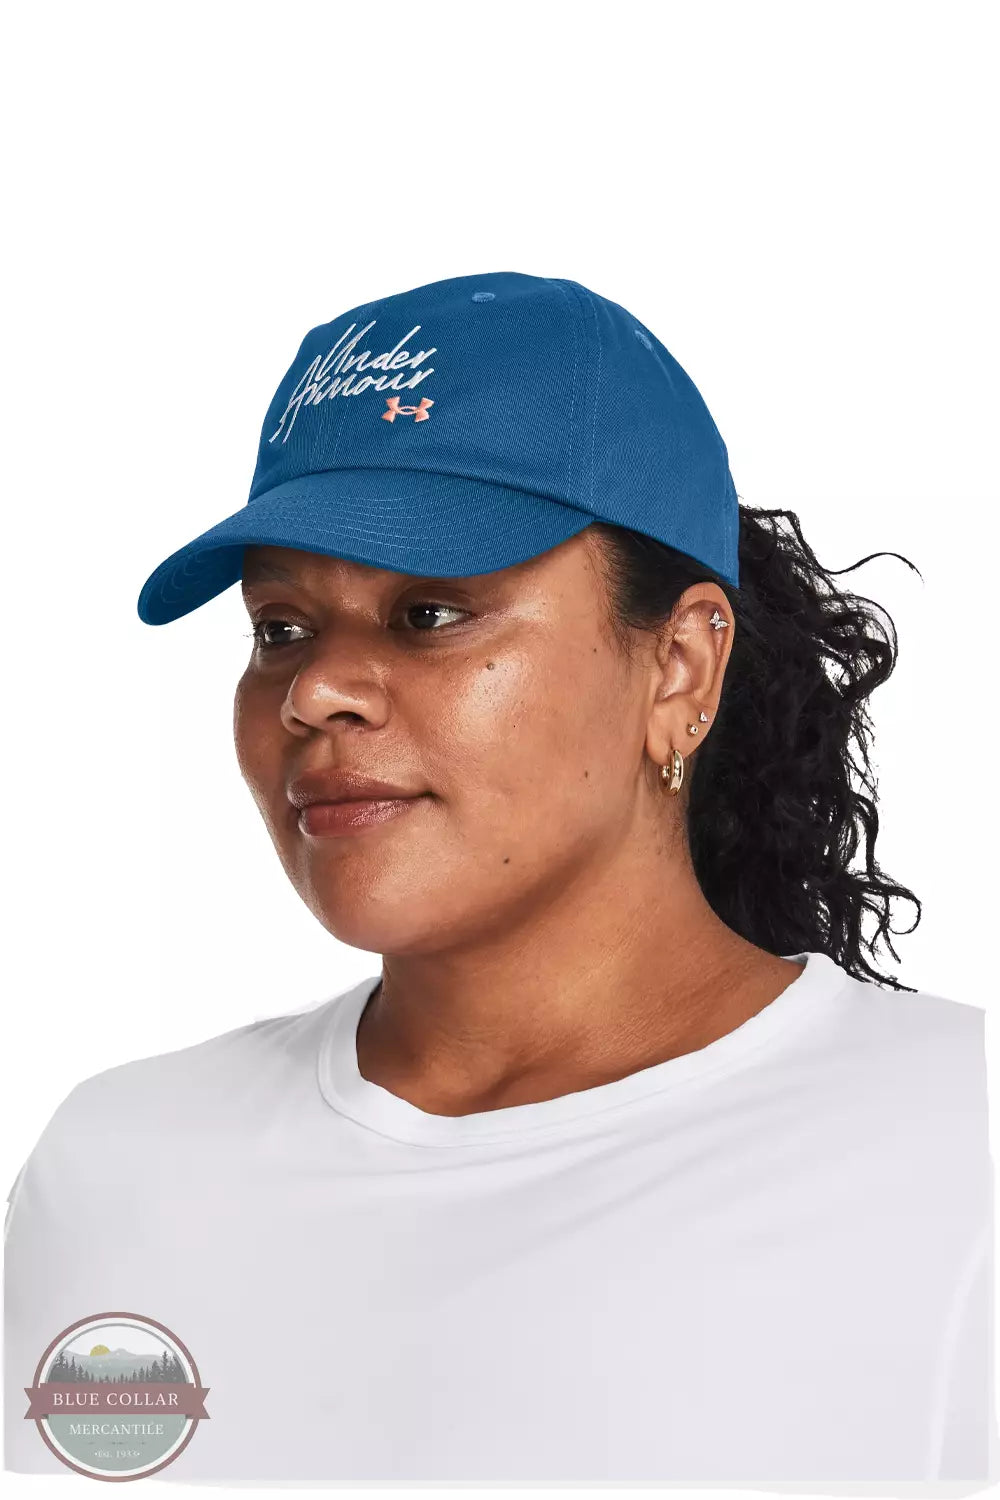 Under Armour Women's Favorite Hat - Blue, OSFM